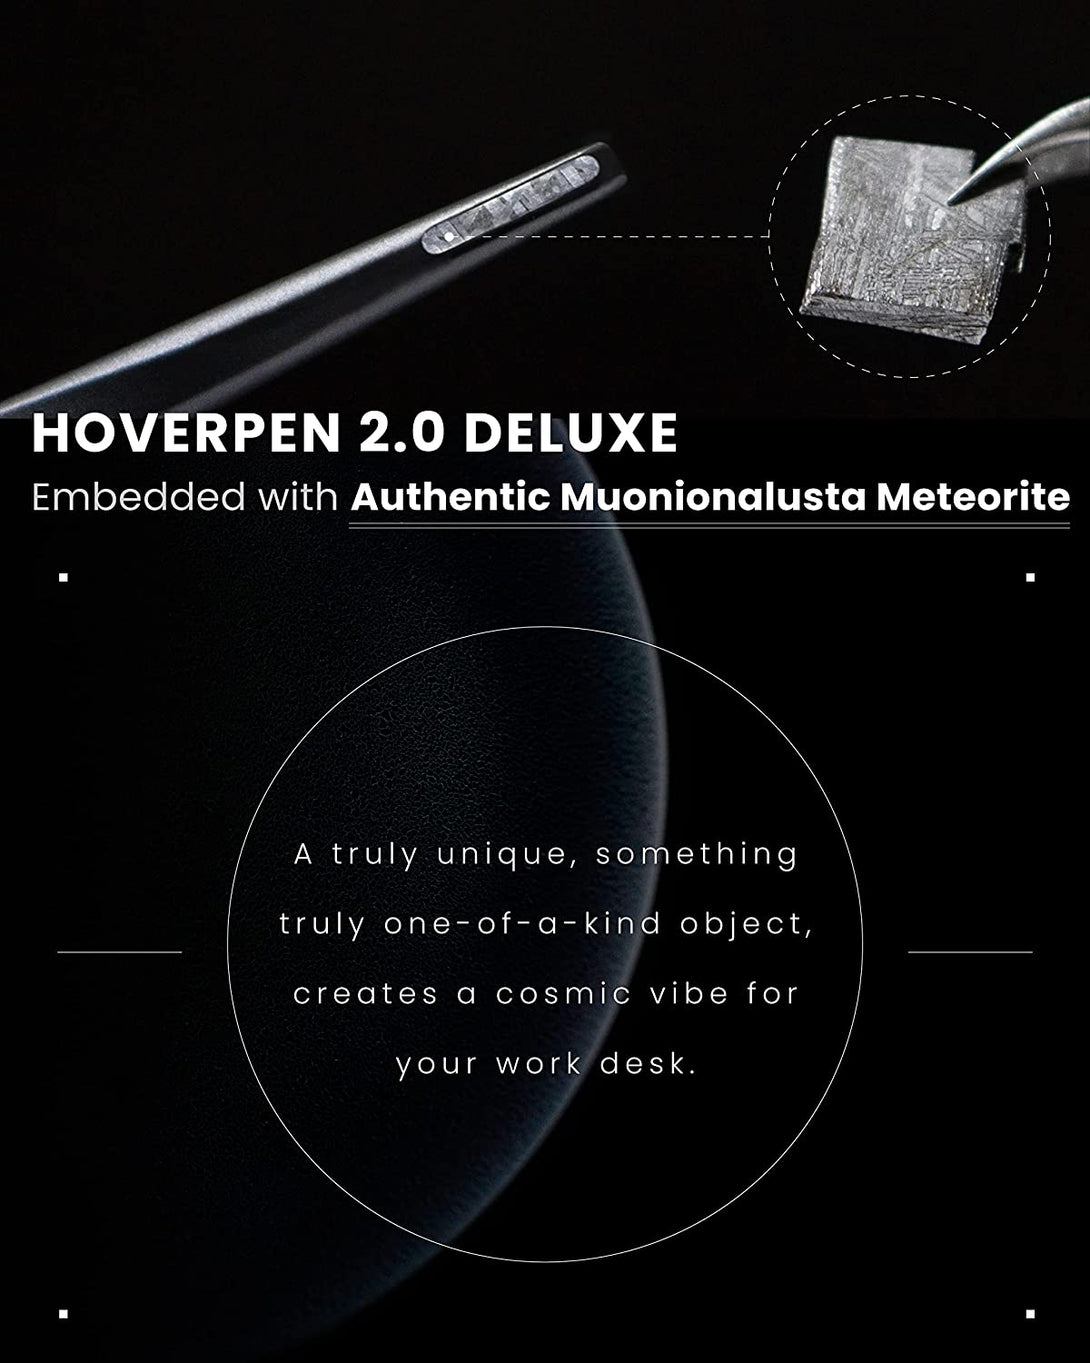 Hoverpen 2.0 with Muonionalusta Meteorite